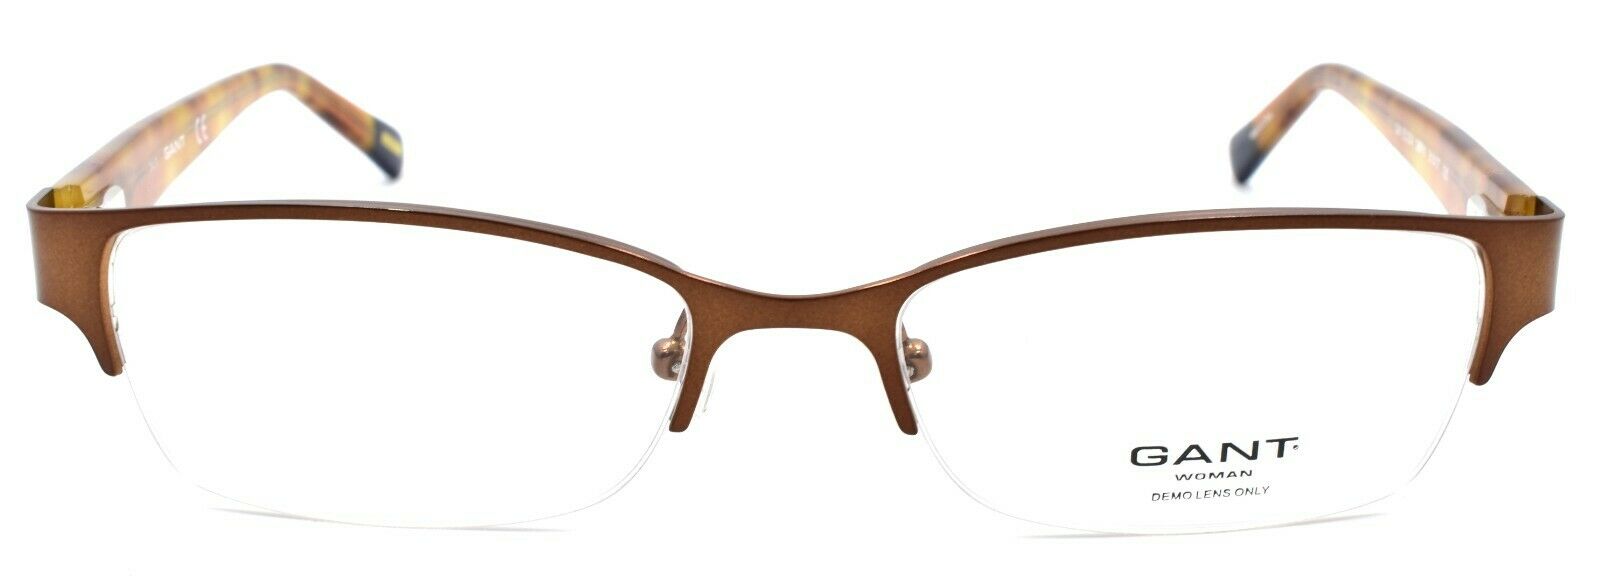 2-GANT GW Eliza SBRN Women's Half-rim Eyeglasses Frames 51-17-135 Satin Brown-715583703353-IKSpecs